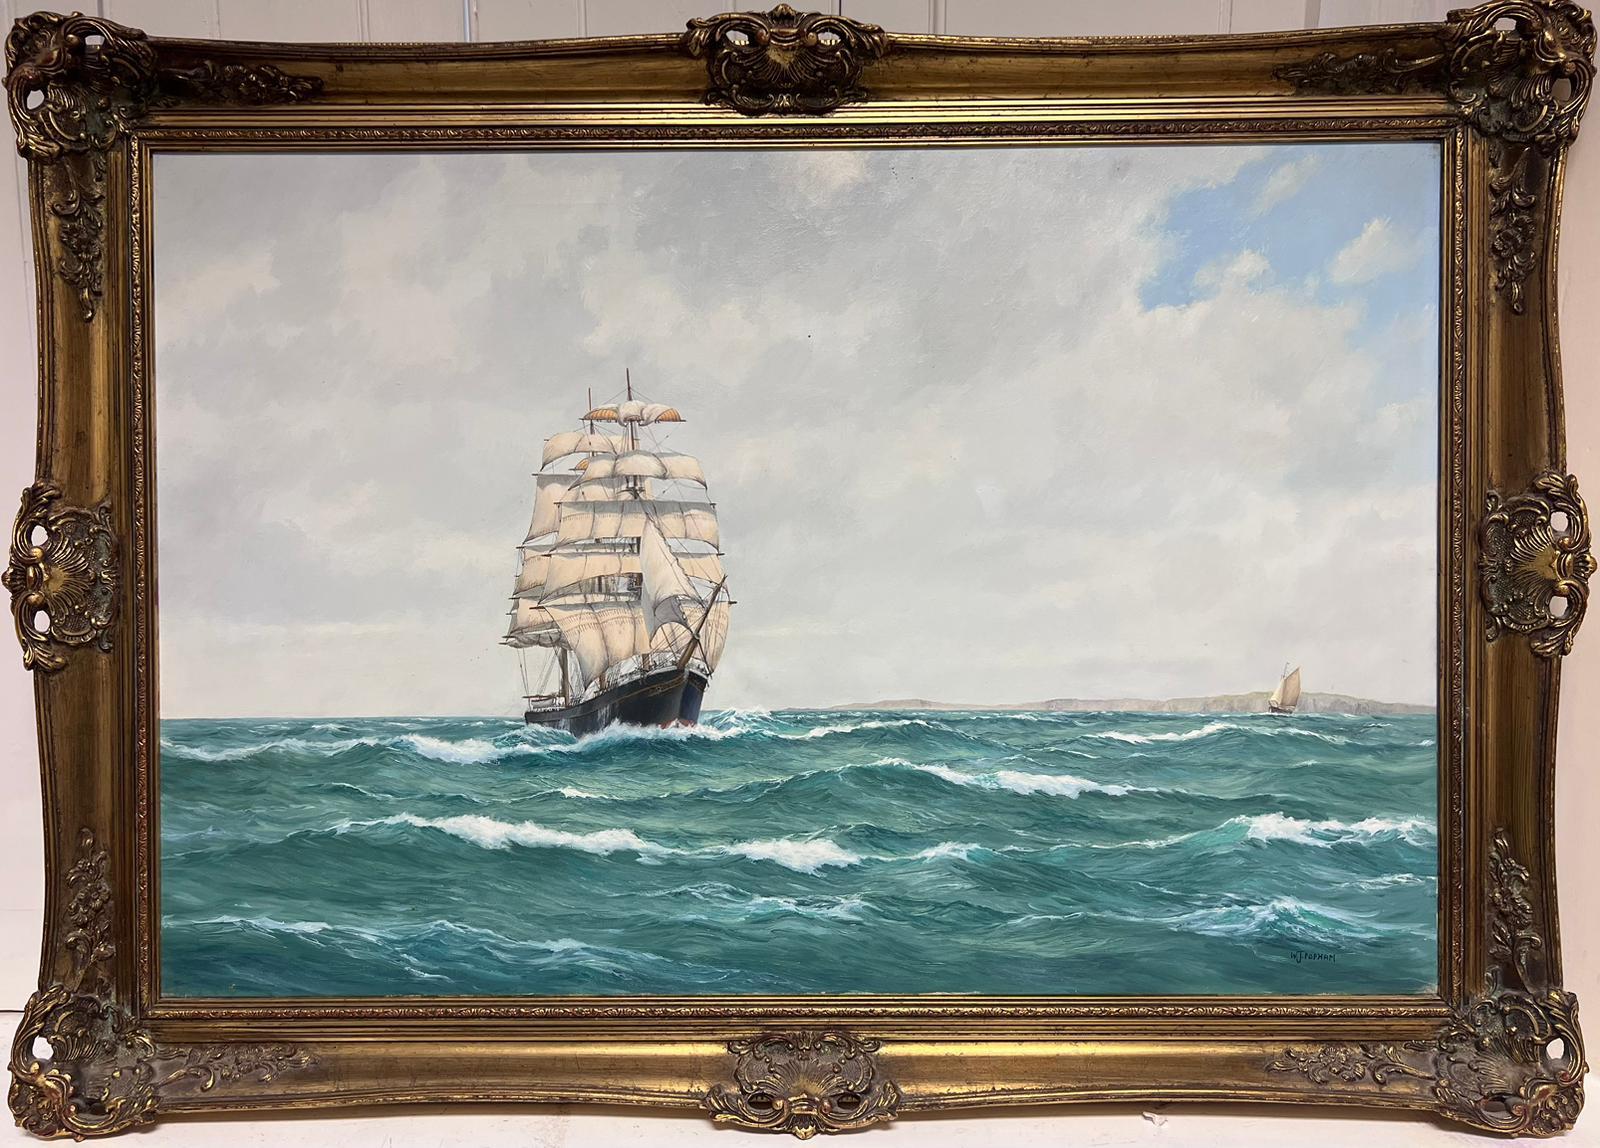 William John Popham Landscape Painting - Huge British Marine Oil Painting Tall Sailing Ship at Sea off Coastline, signed